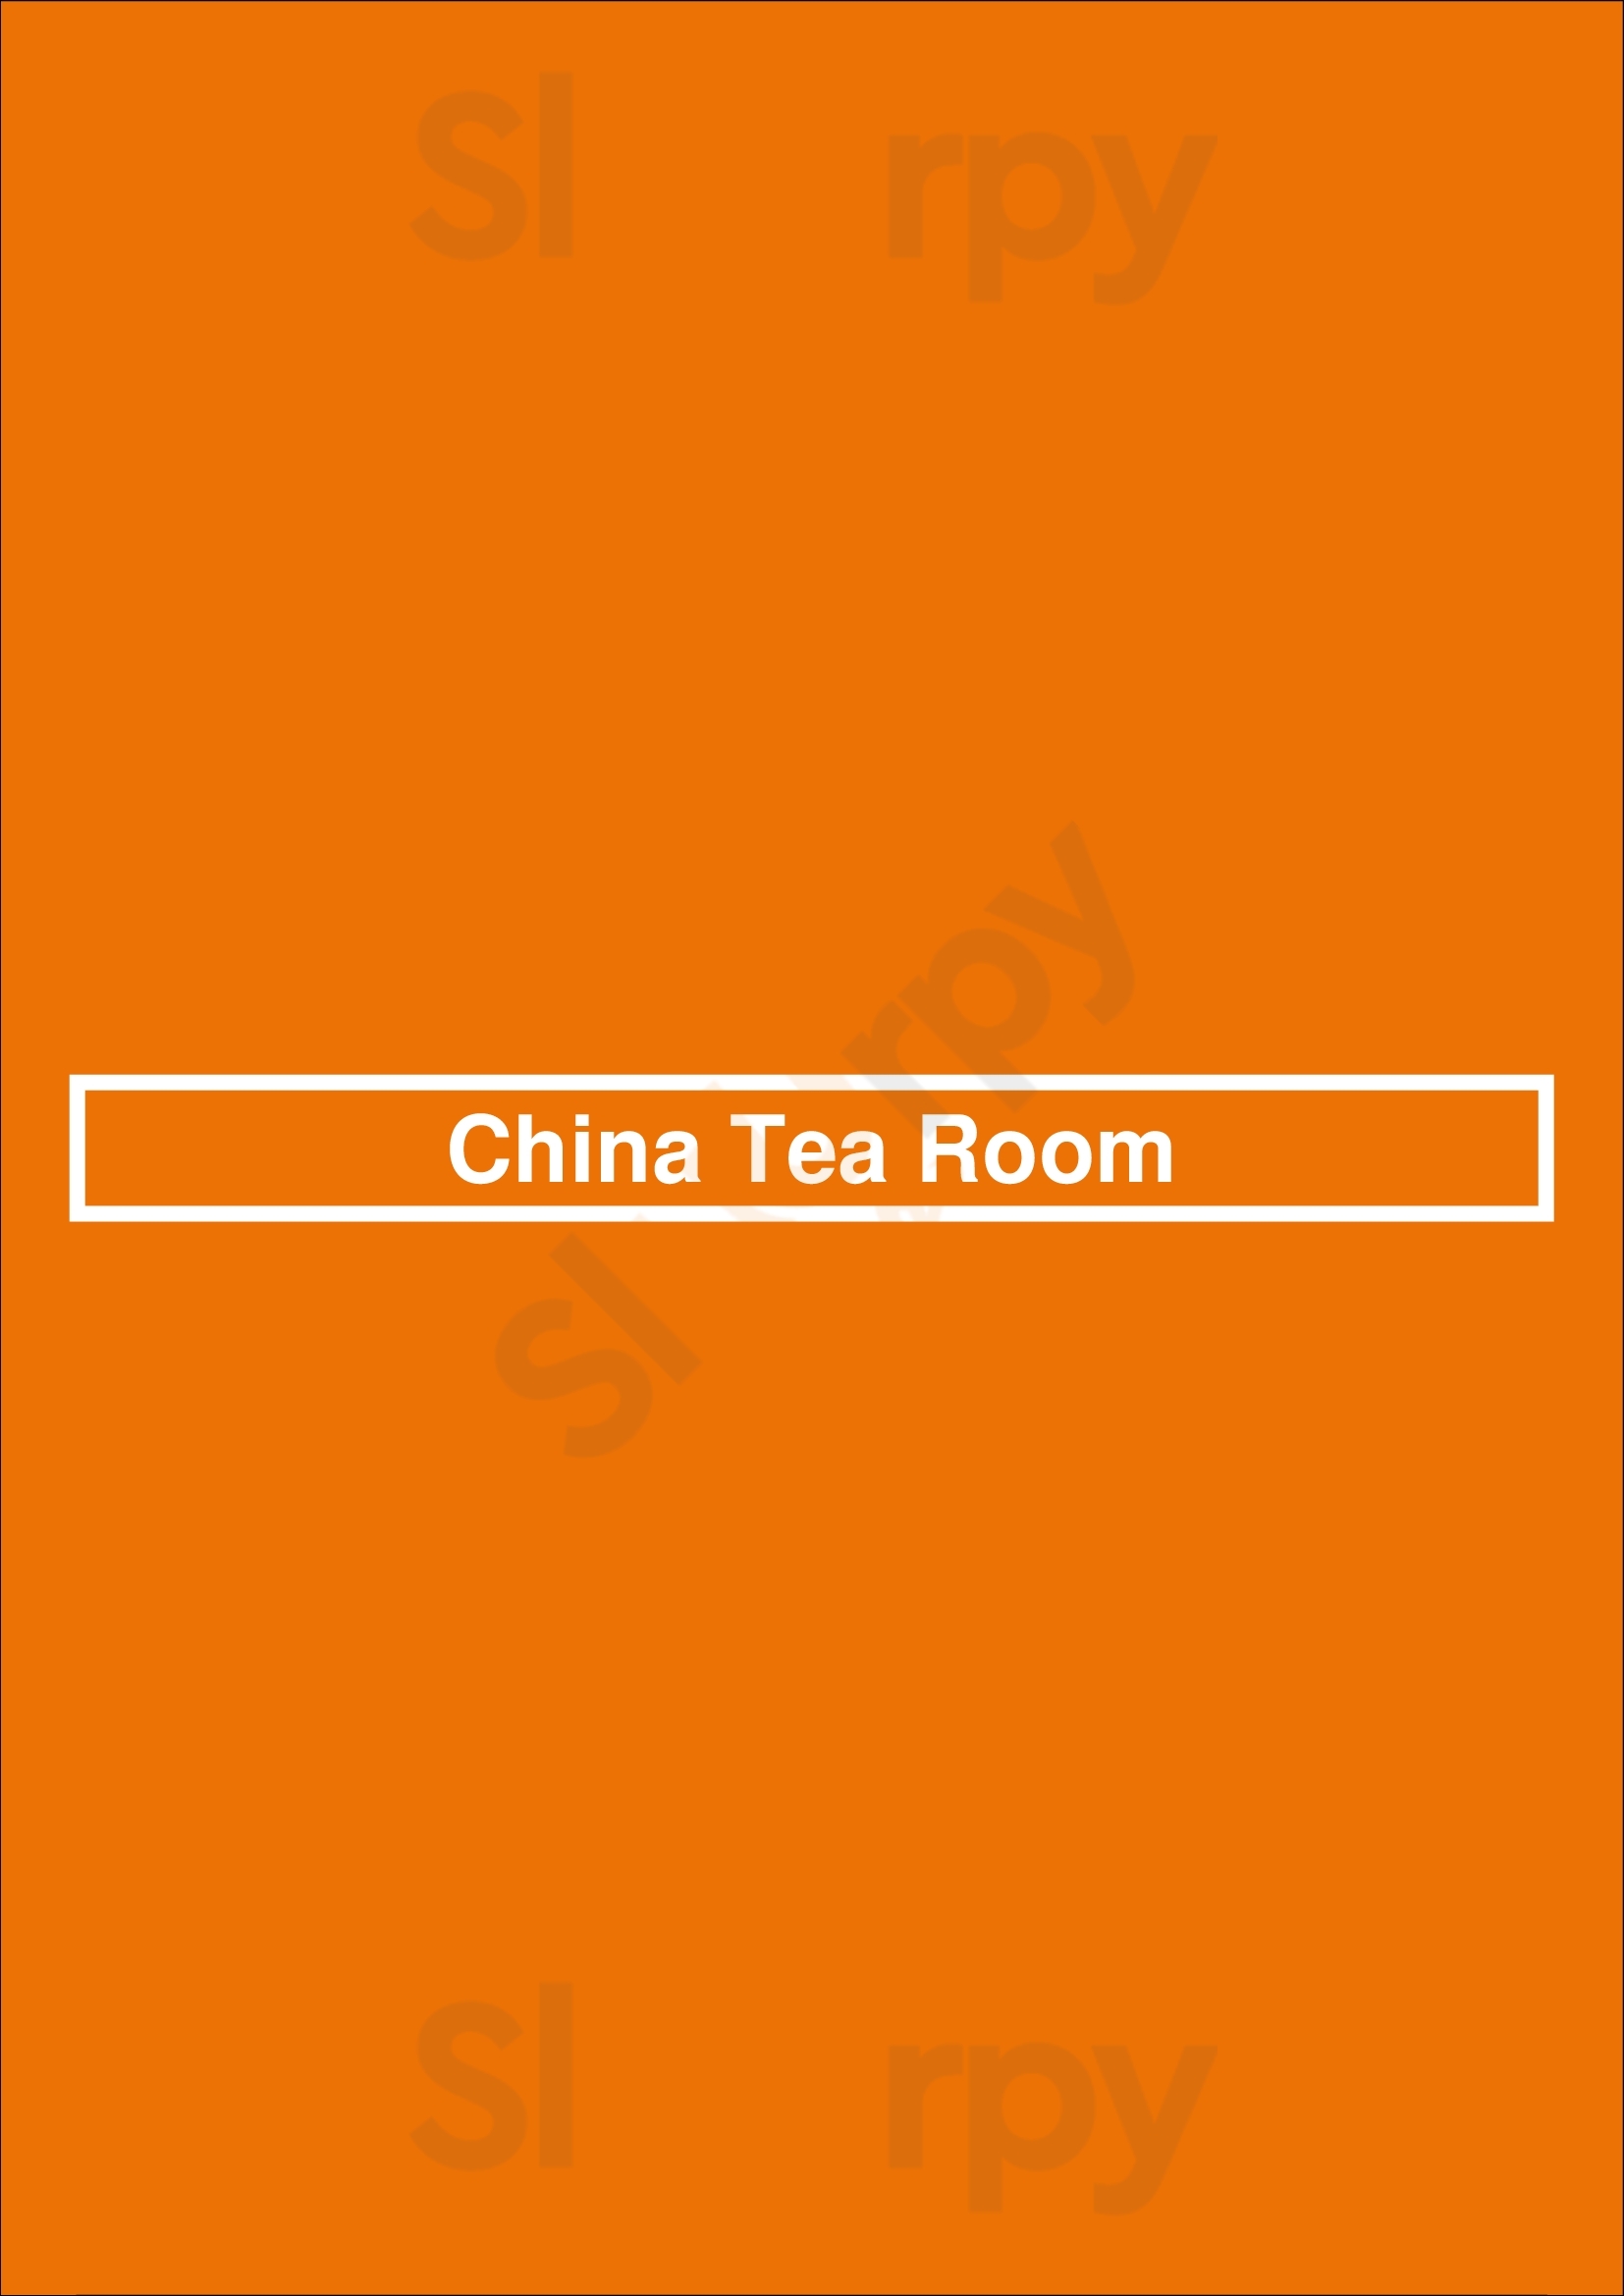 China Tea Room Charlotte Menu - 1